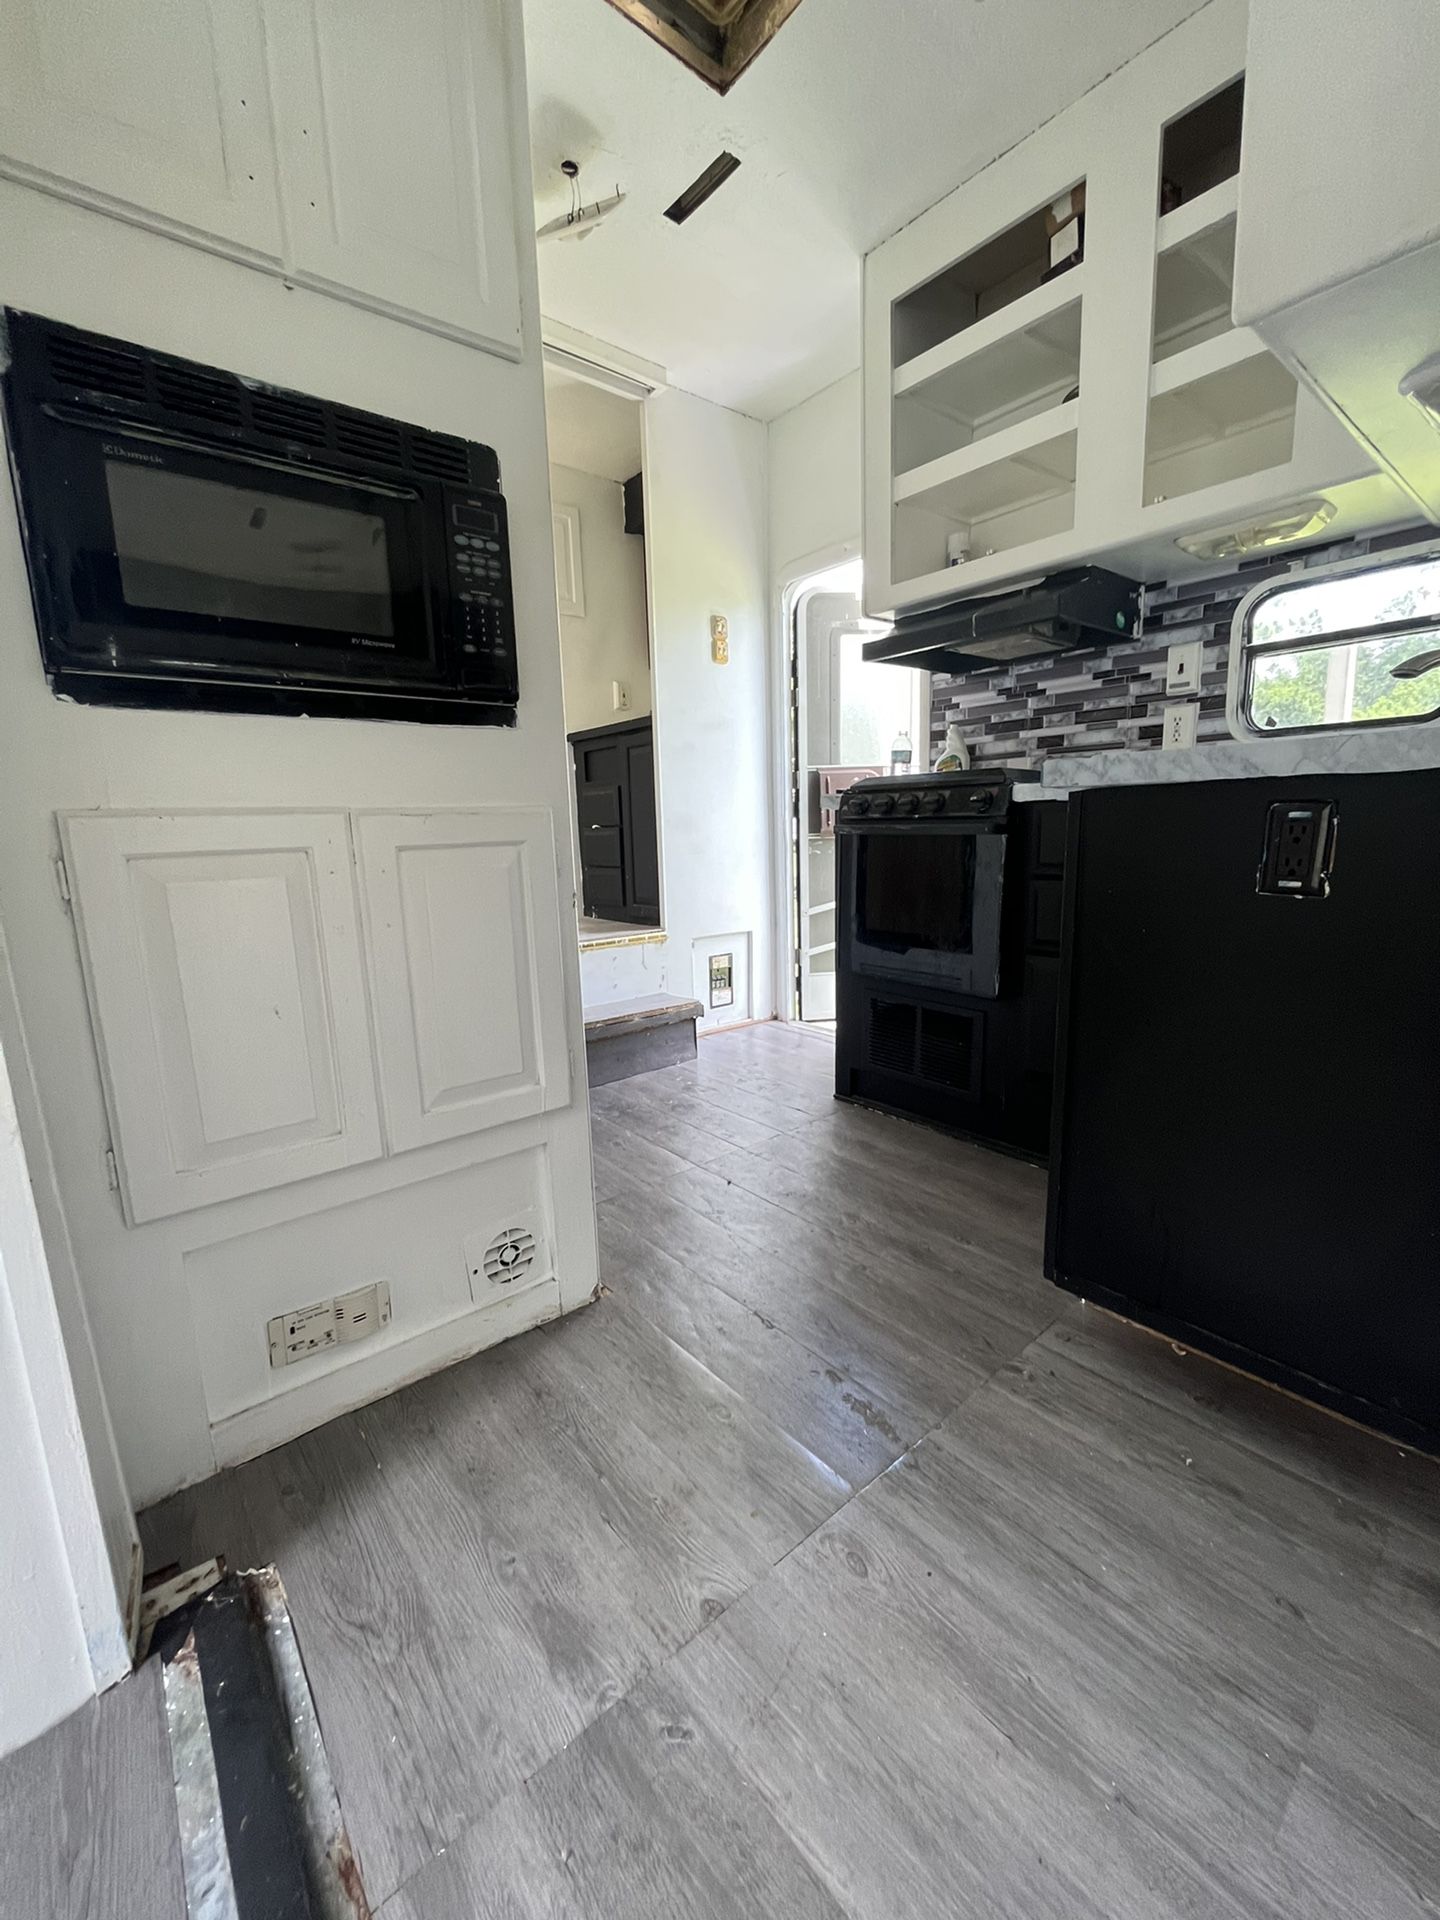 36 Ft 5th Wheel Trailer, RV mobile Home | Big living Room